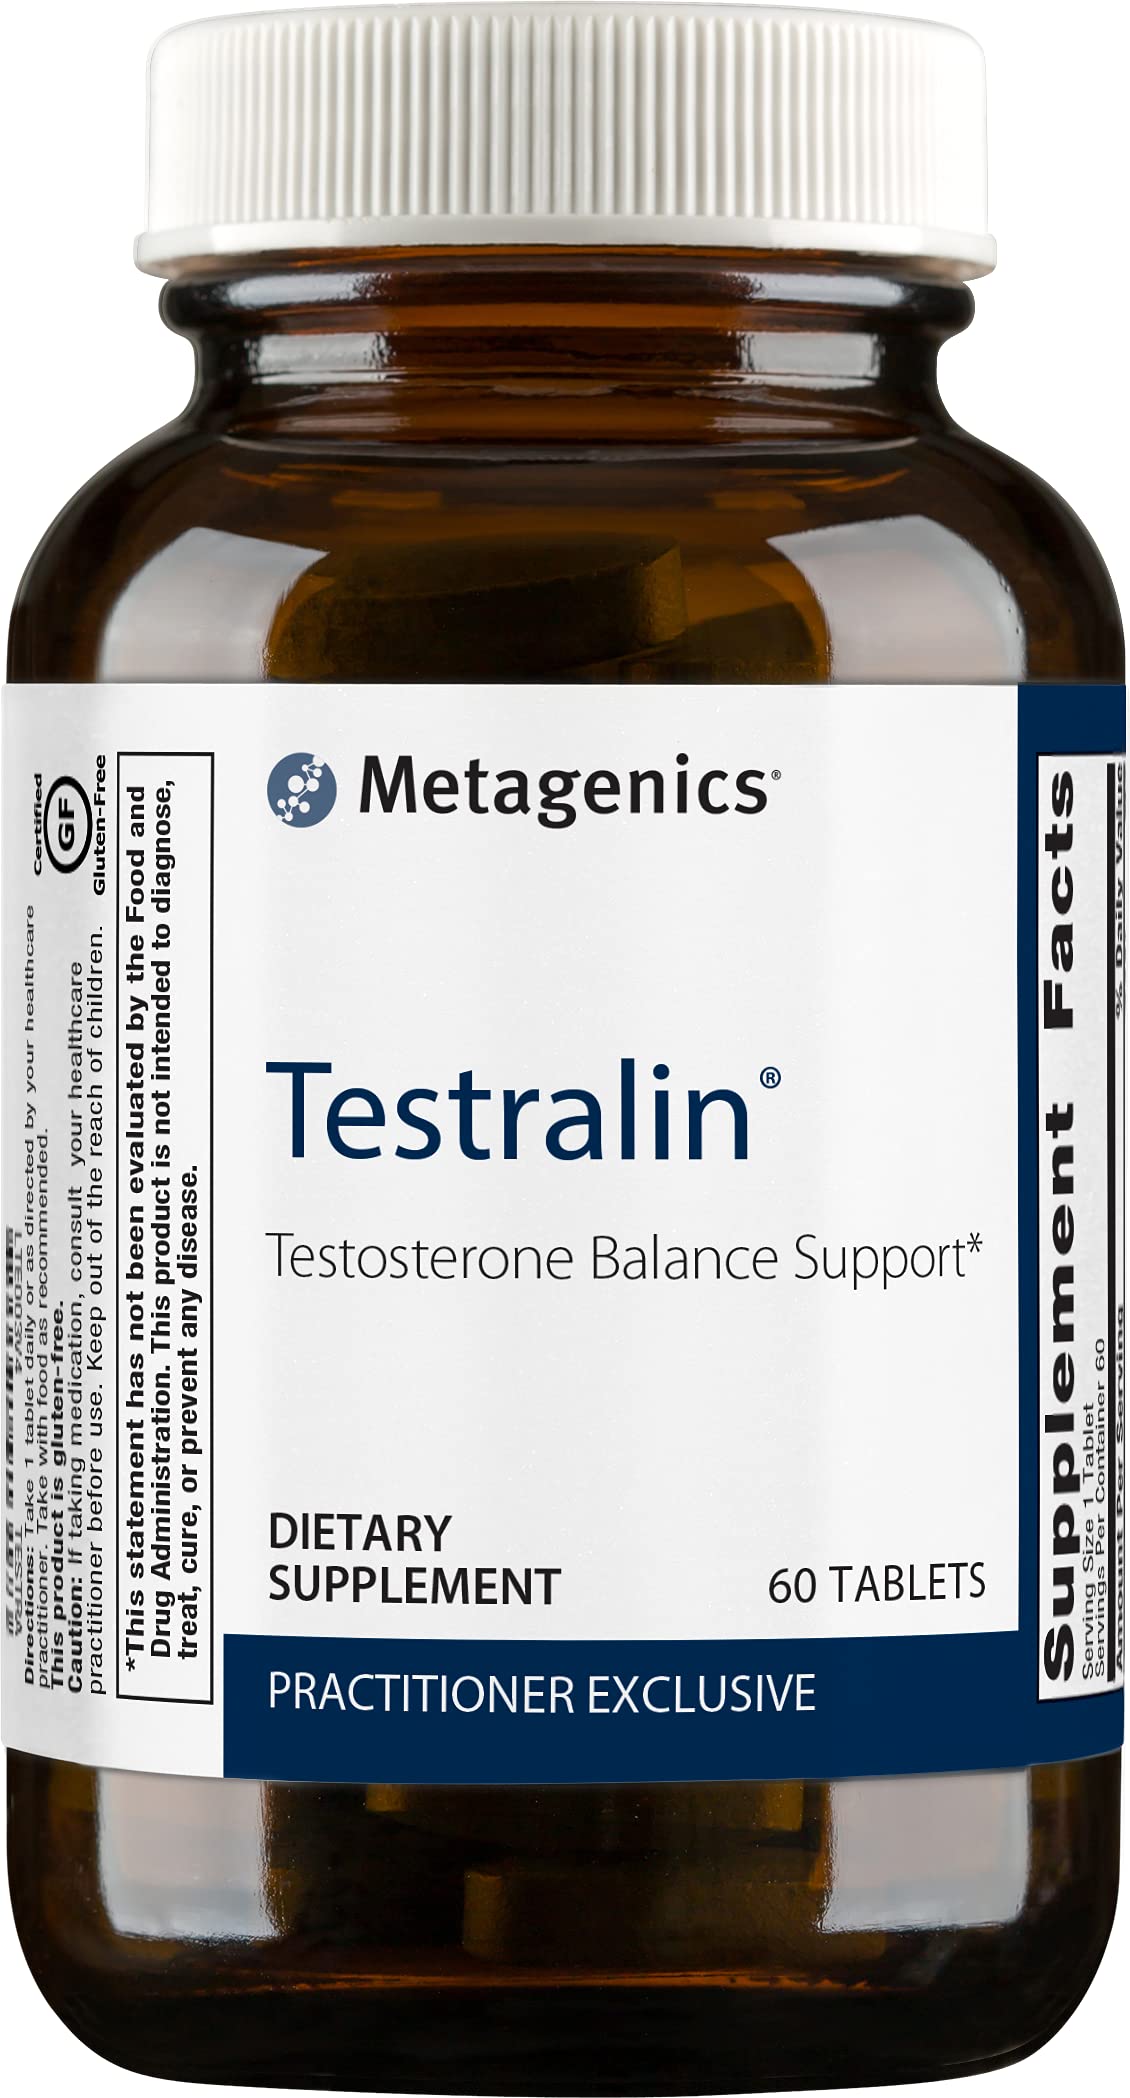 Metagenics - Testralin, 60 Count